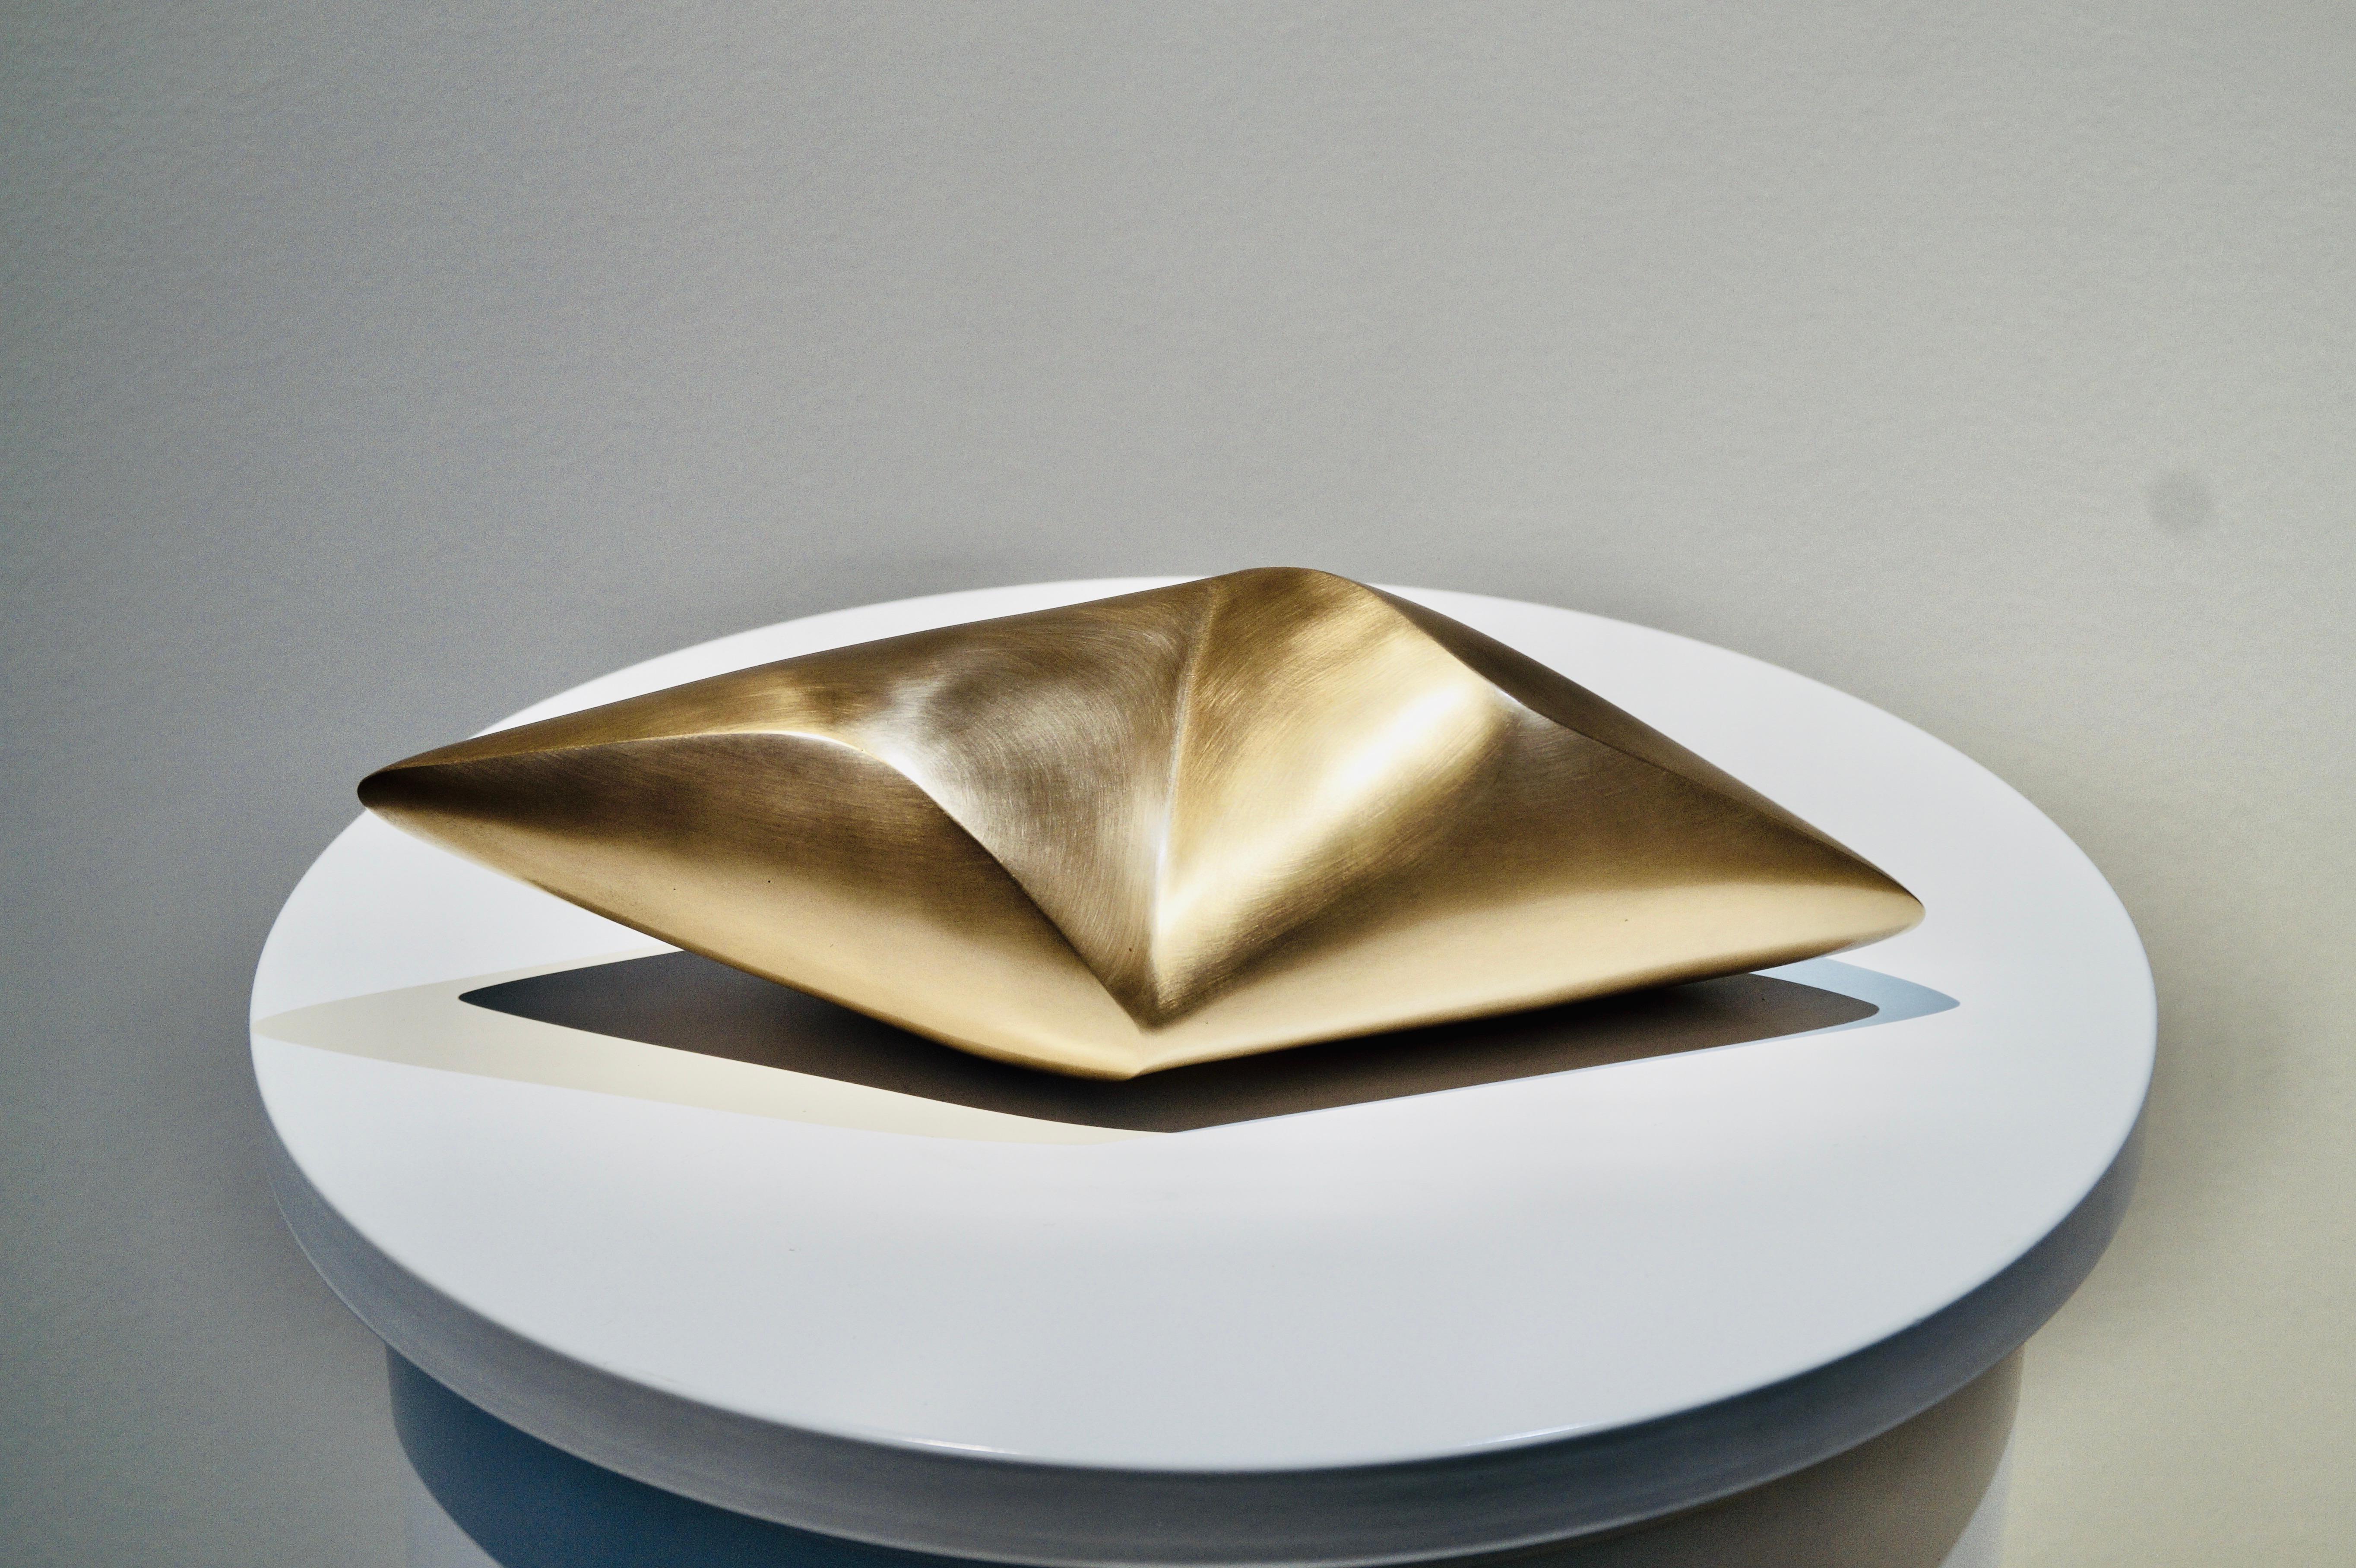 Stretched Pillow, 2014, Bronze, sculpture, contemporary,  - Sculpture by Maximilian Verhas